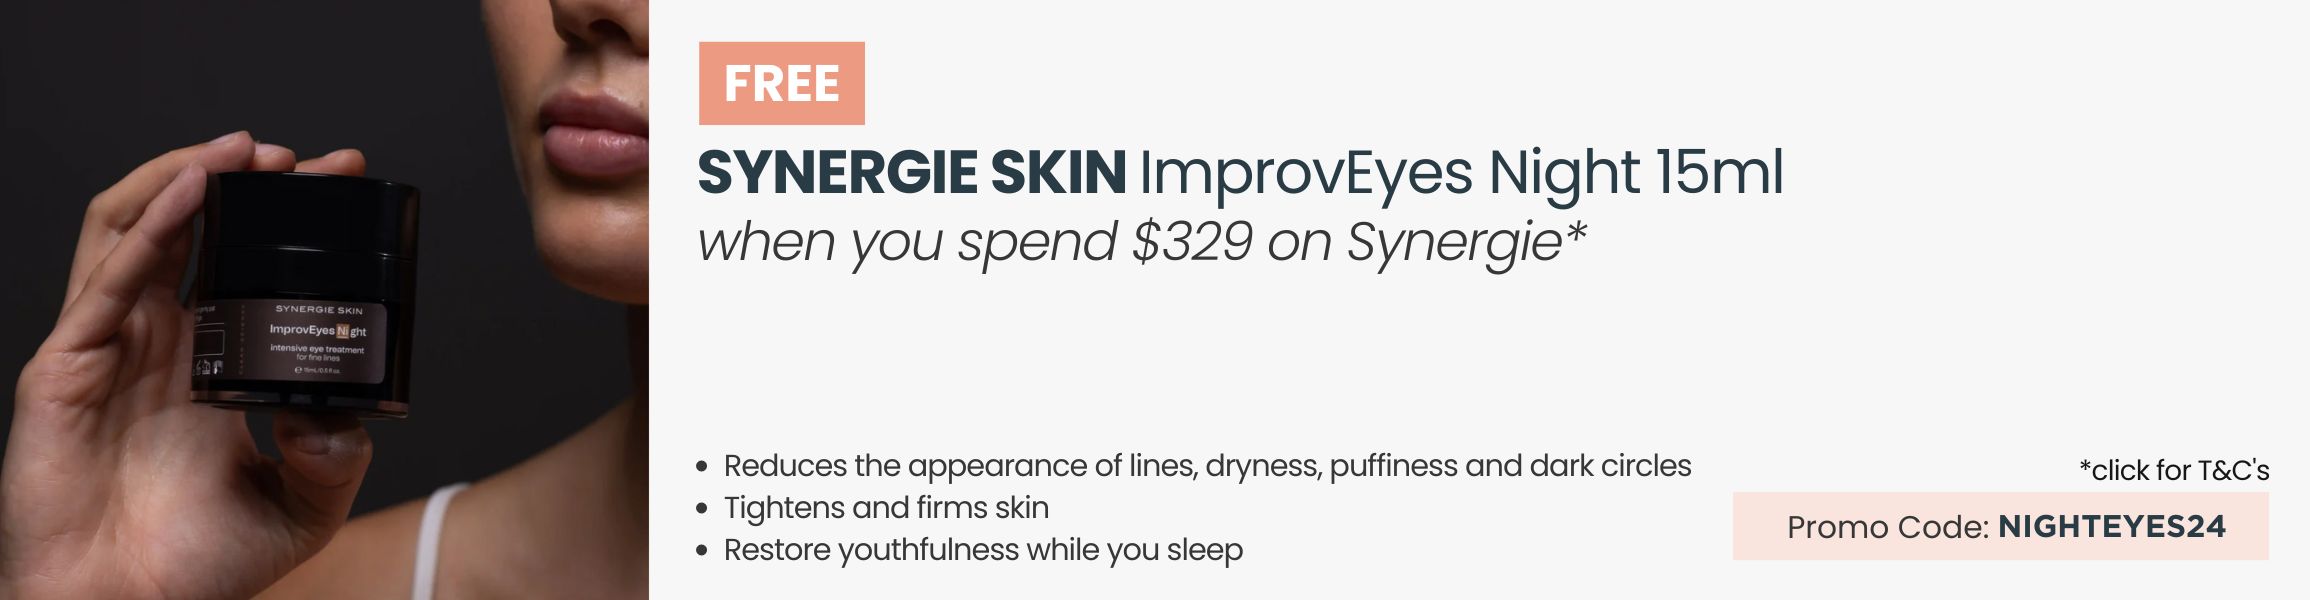 FREE Synergie Skin ImprovEyes Night 15ml worth $125. Min spend $329 on Synergie. Promo Code: NIGHTEYES24